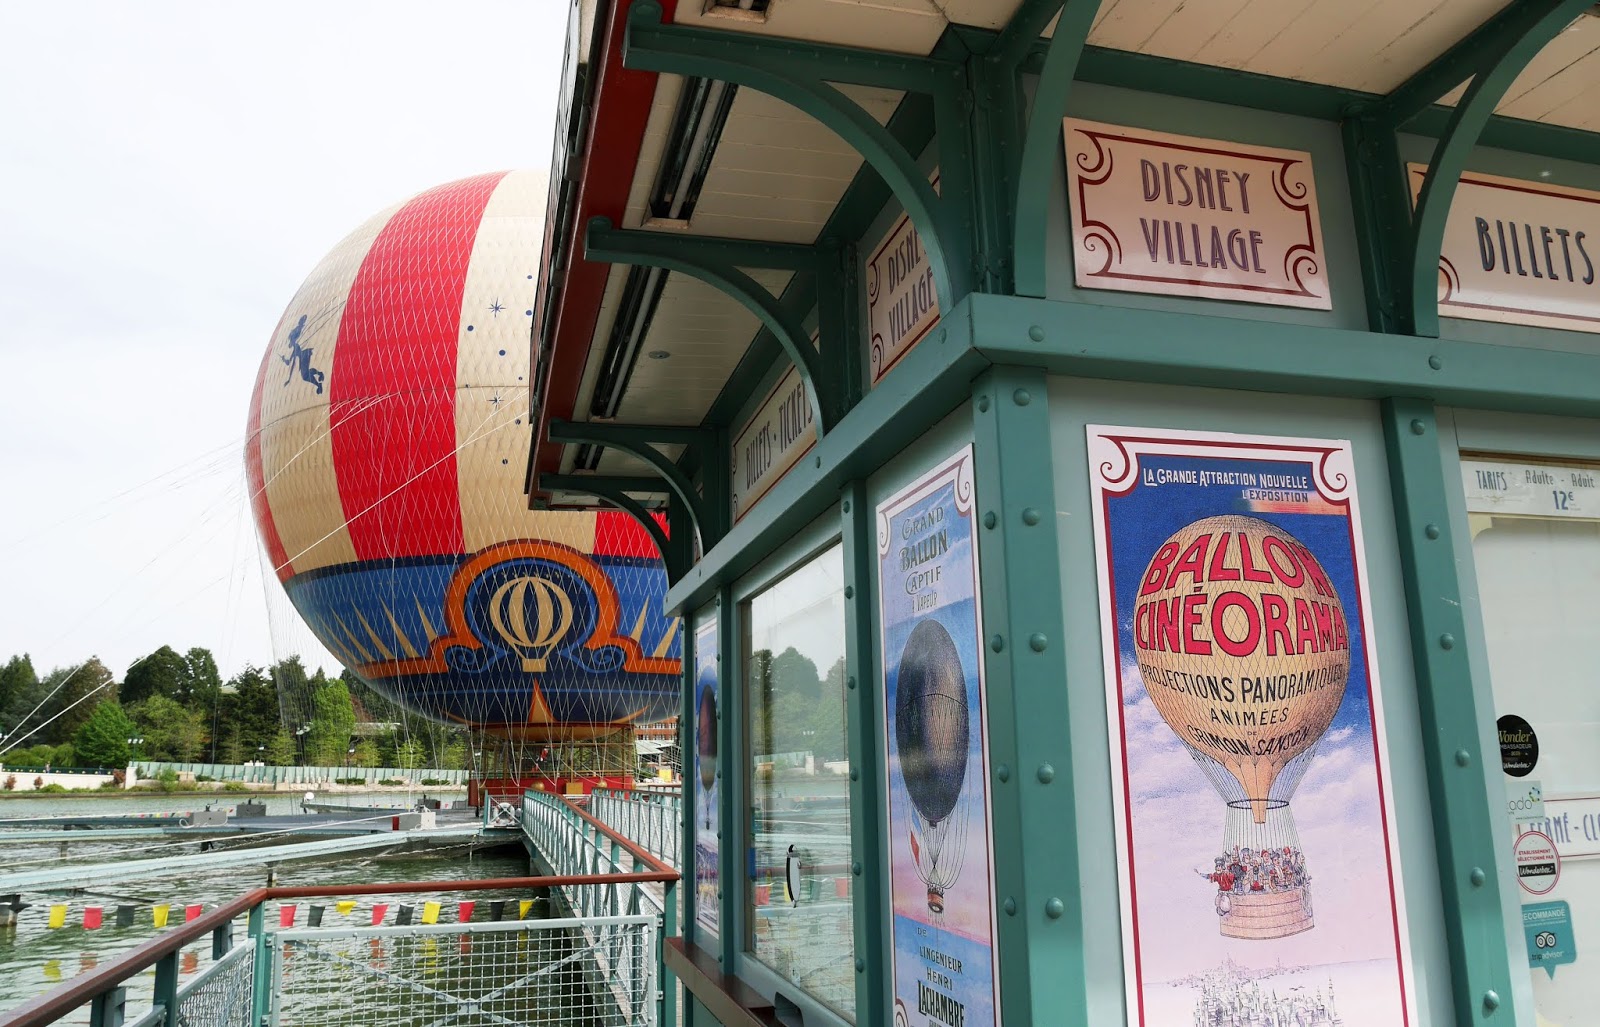 Disney Village hot air balloon ride (PanoraMagique), Disneyland Paris